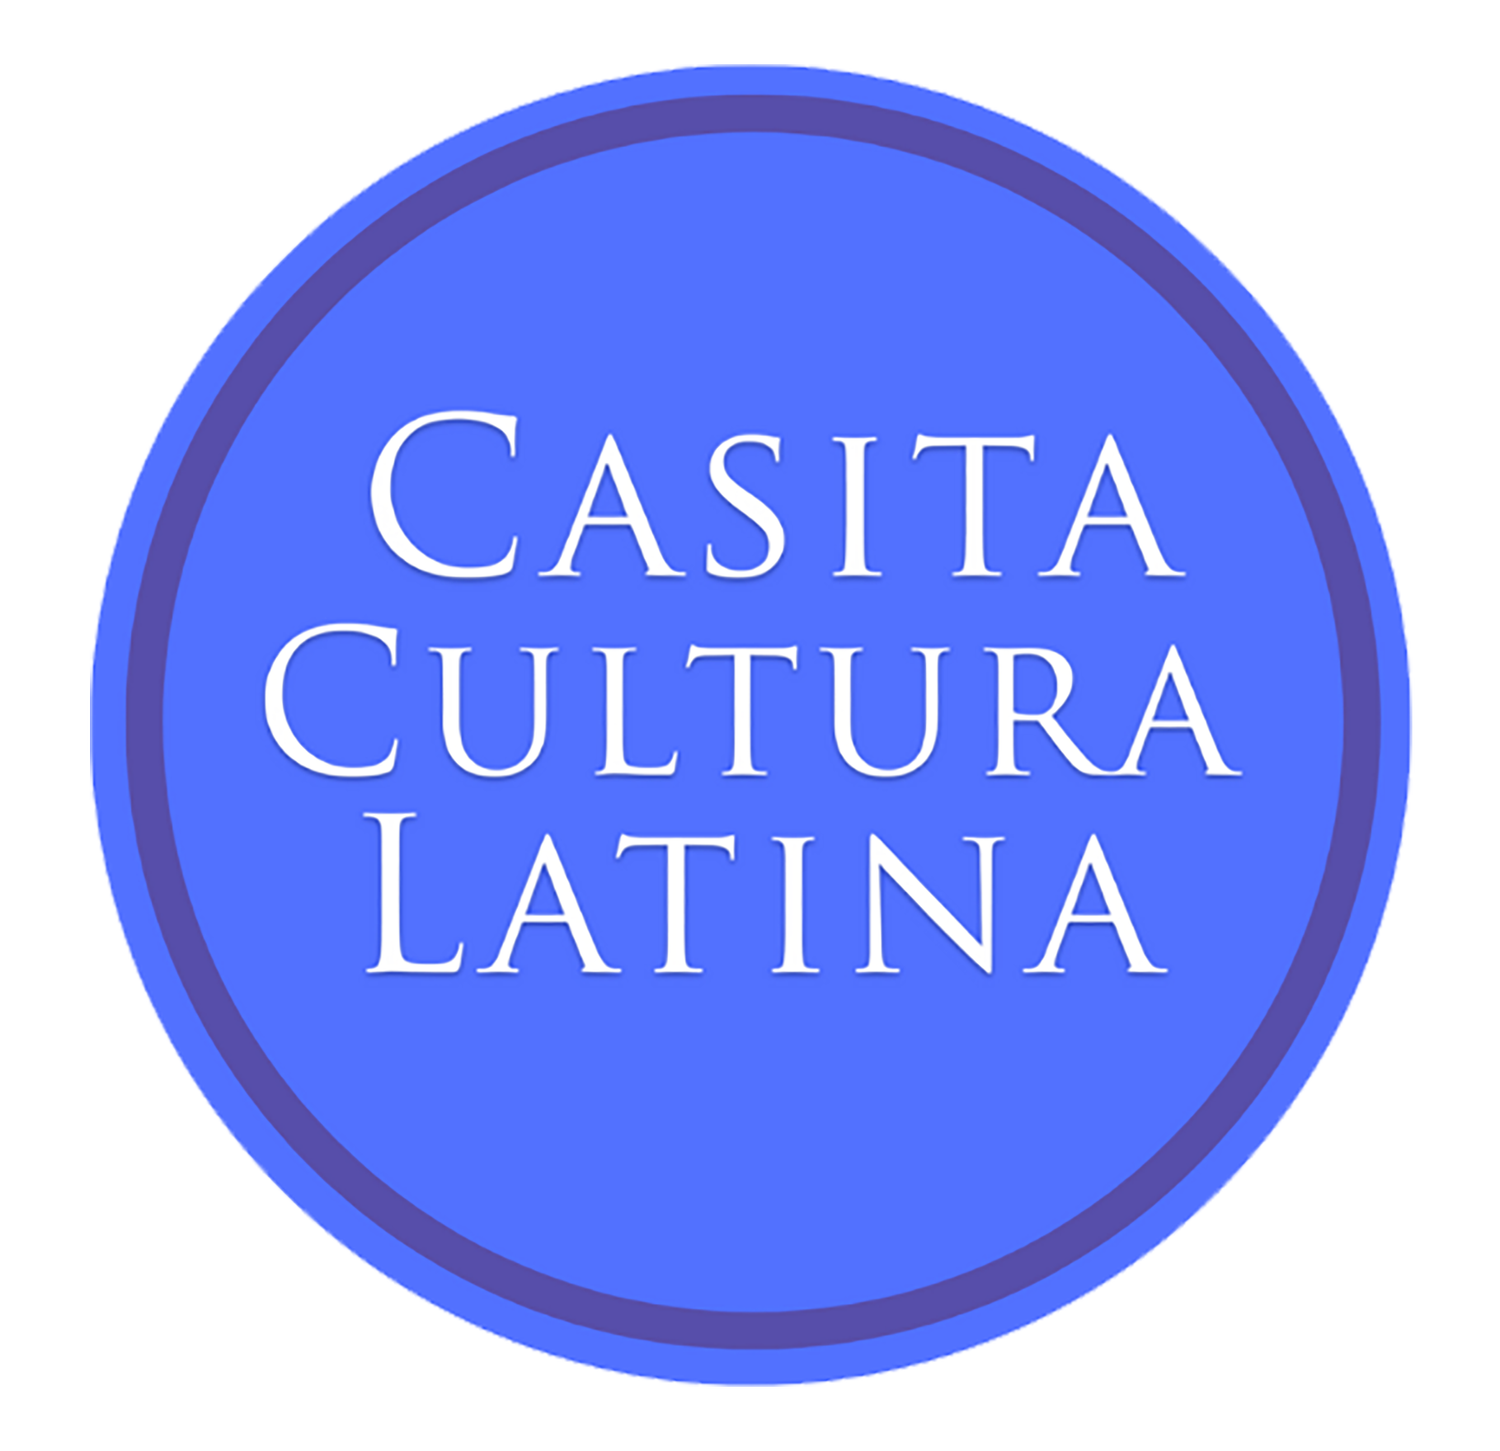 Casita Cultura Latina